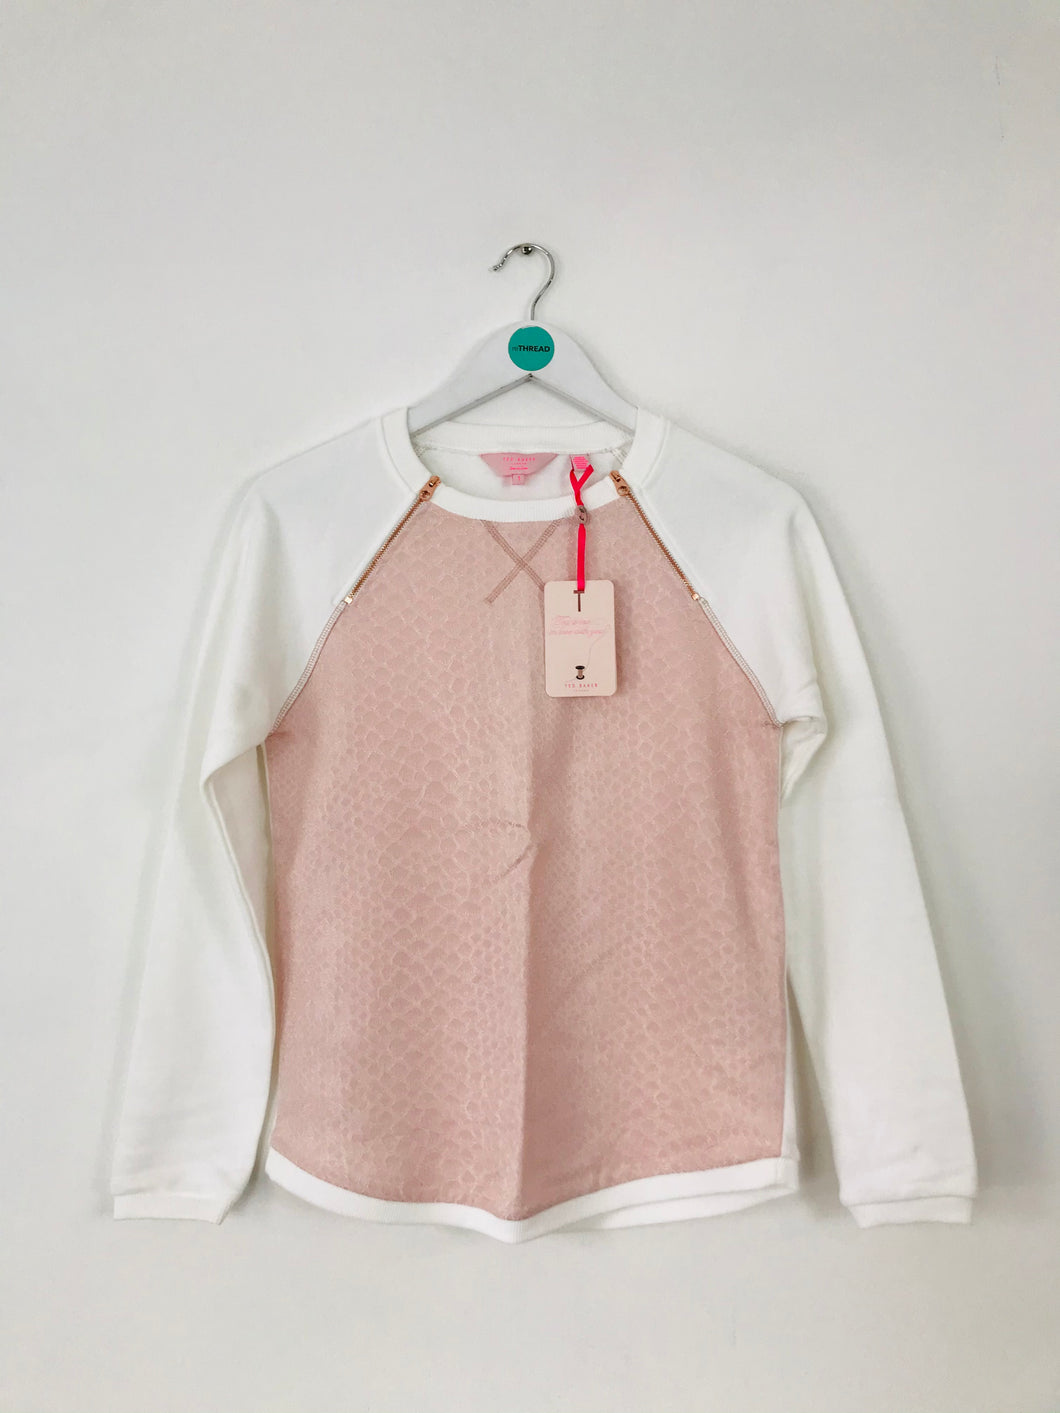 Ted Baker Women’s Animal Print Sweatshirt NWT | 1 UK8 | White and Pink